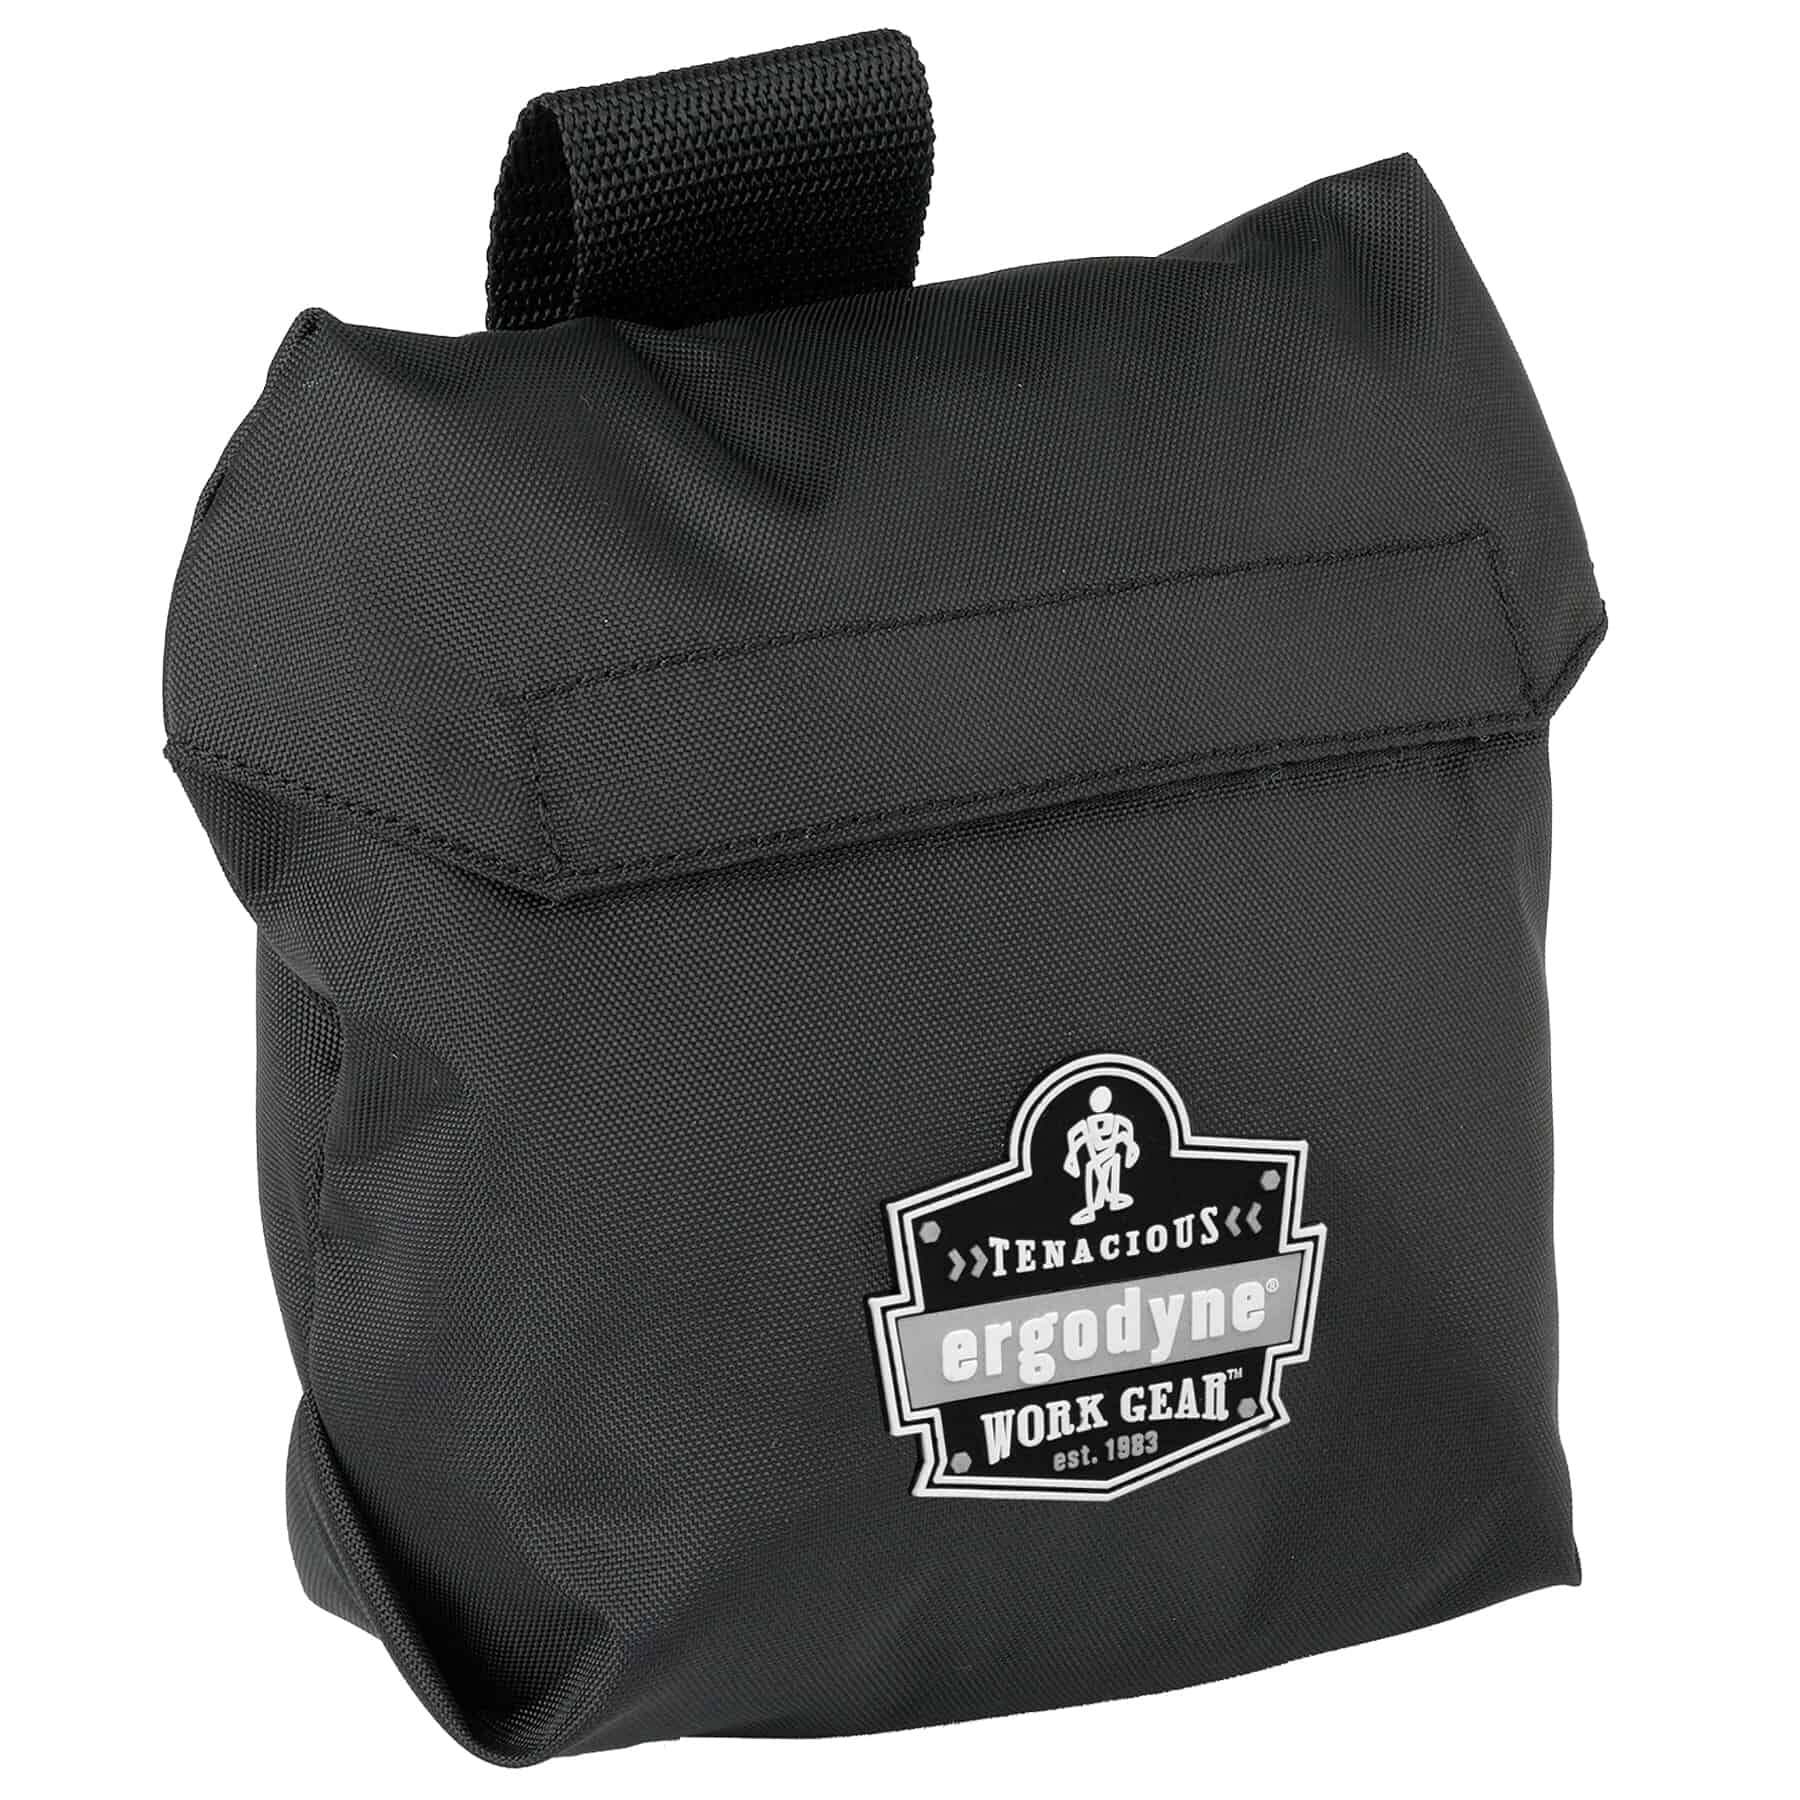 Ergodyne Arsenal 5182 Half Mask Respirator Bag Full Source